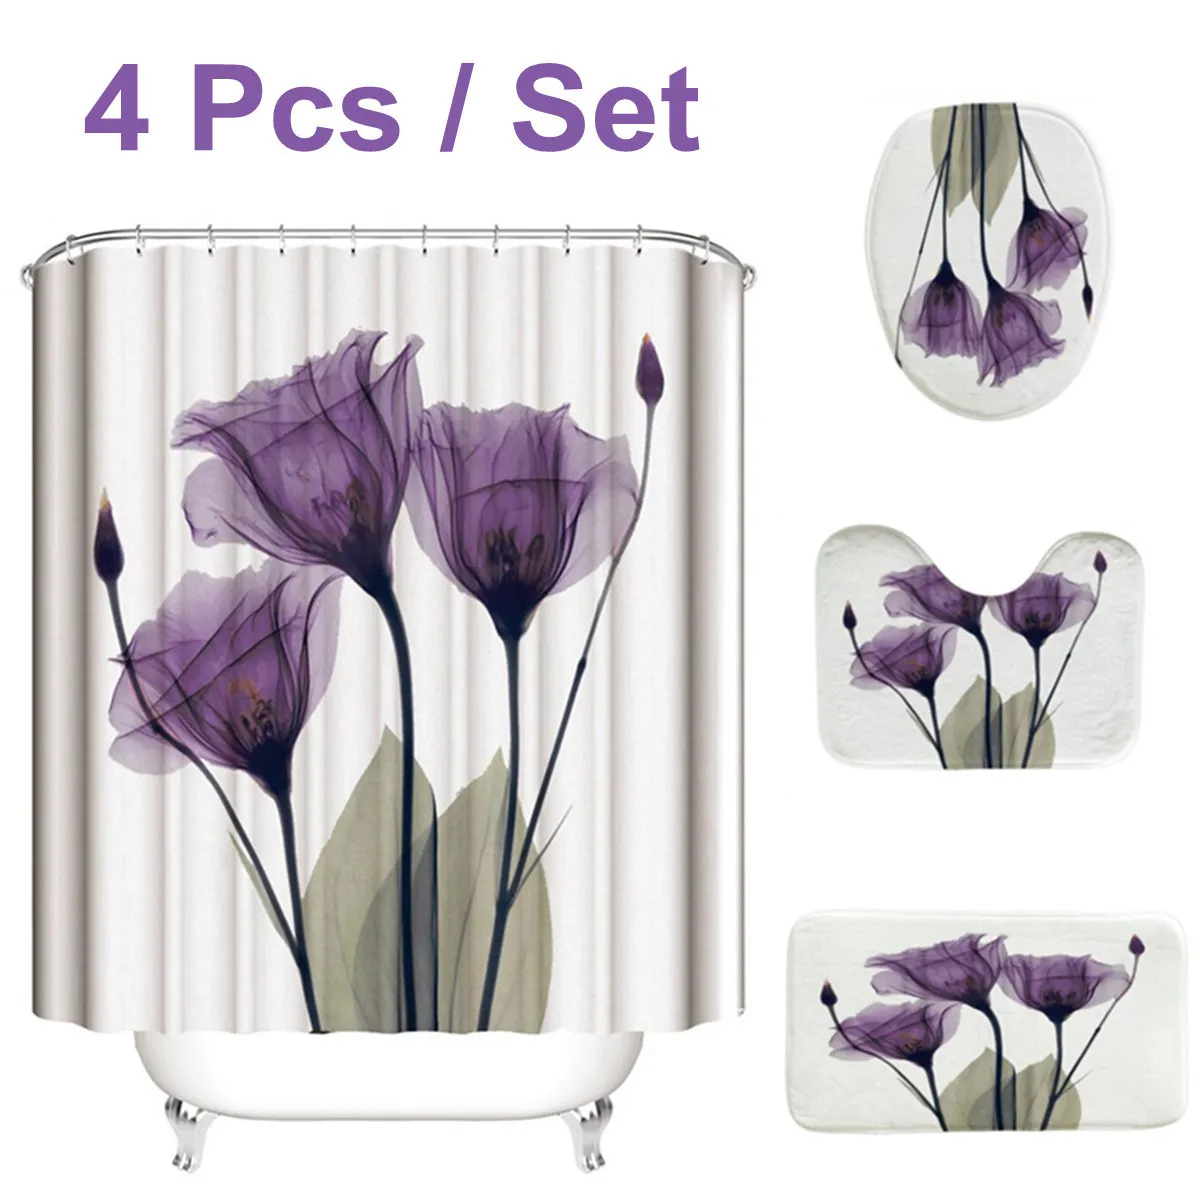 Flannel Surface Bathroom Mats Shower Curtain NonSlip Rug Lid Toilet Cover Bath Mat Set Purple Flowers Print Decor Home T20077442135